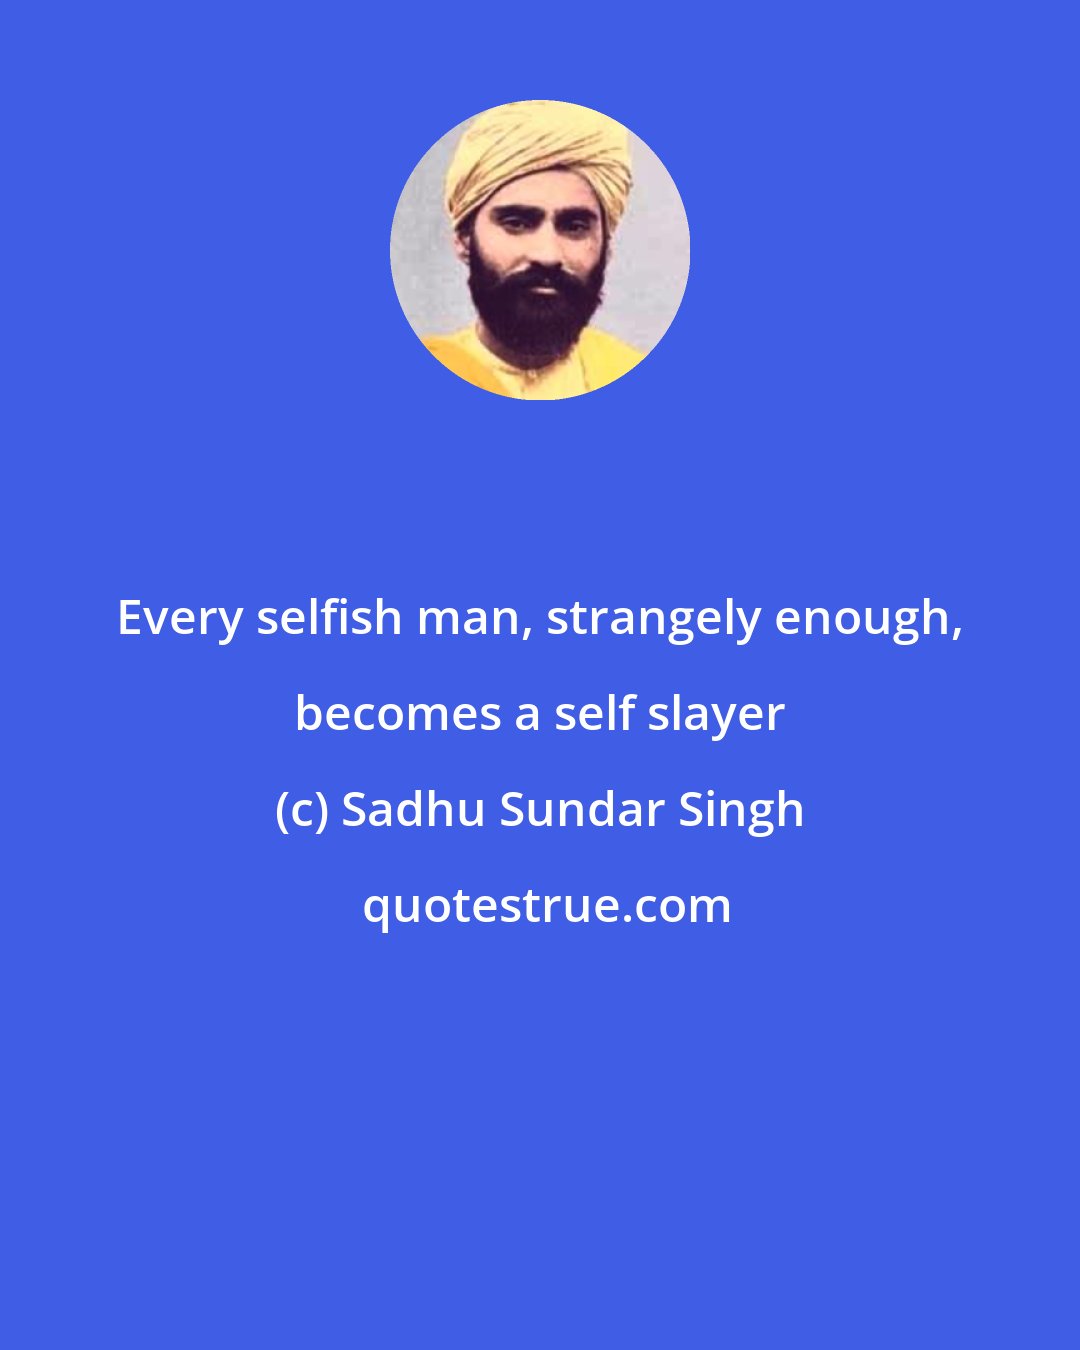 Sadhu Sundar Singh: Every selfish man, strangely enough, becomes a self slayer